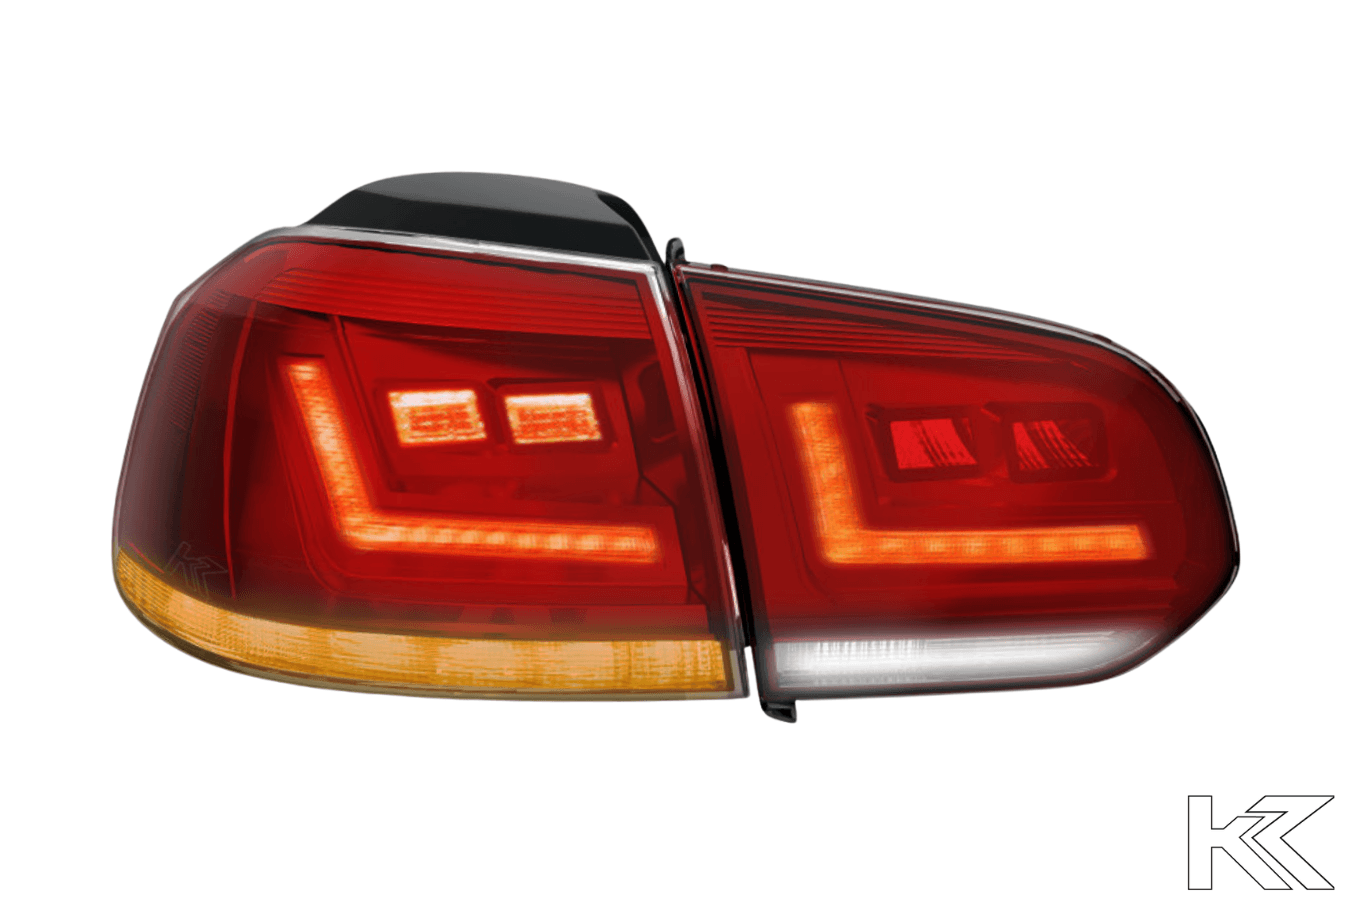 OSRAM LEDriving® VW Golf 6 VI LED taillights Black Edition - K2 Industries